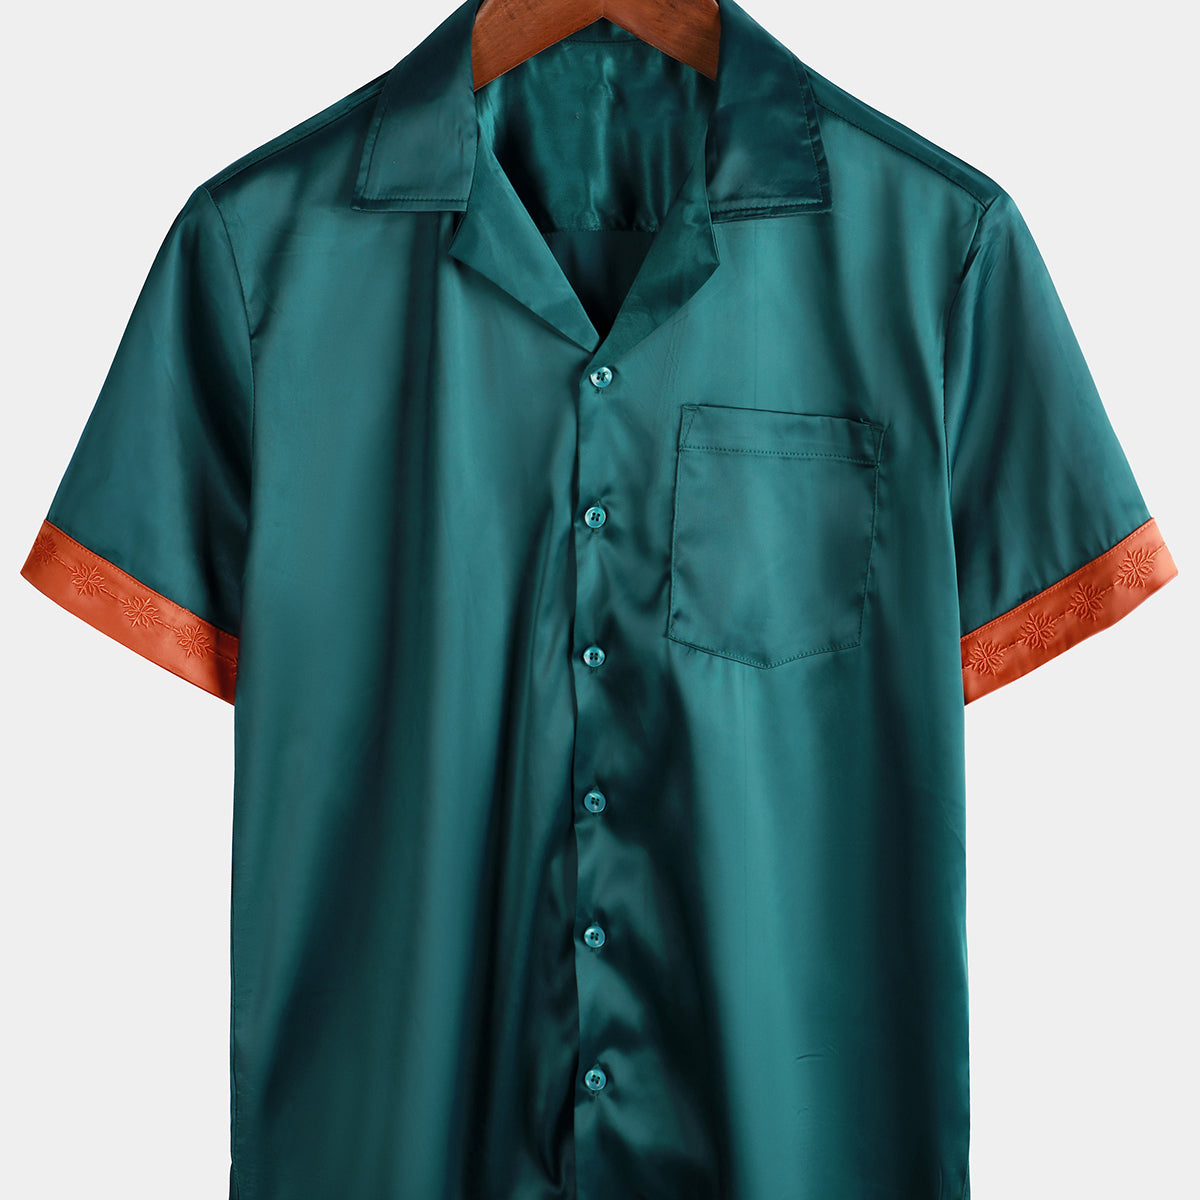 Men's Casual Embroidered Cool Beach Button Up Summer Short Sleeve Shirt